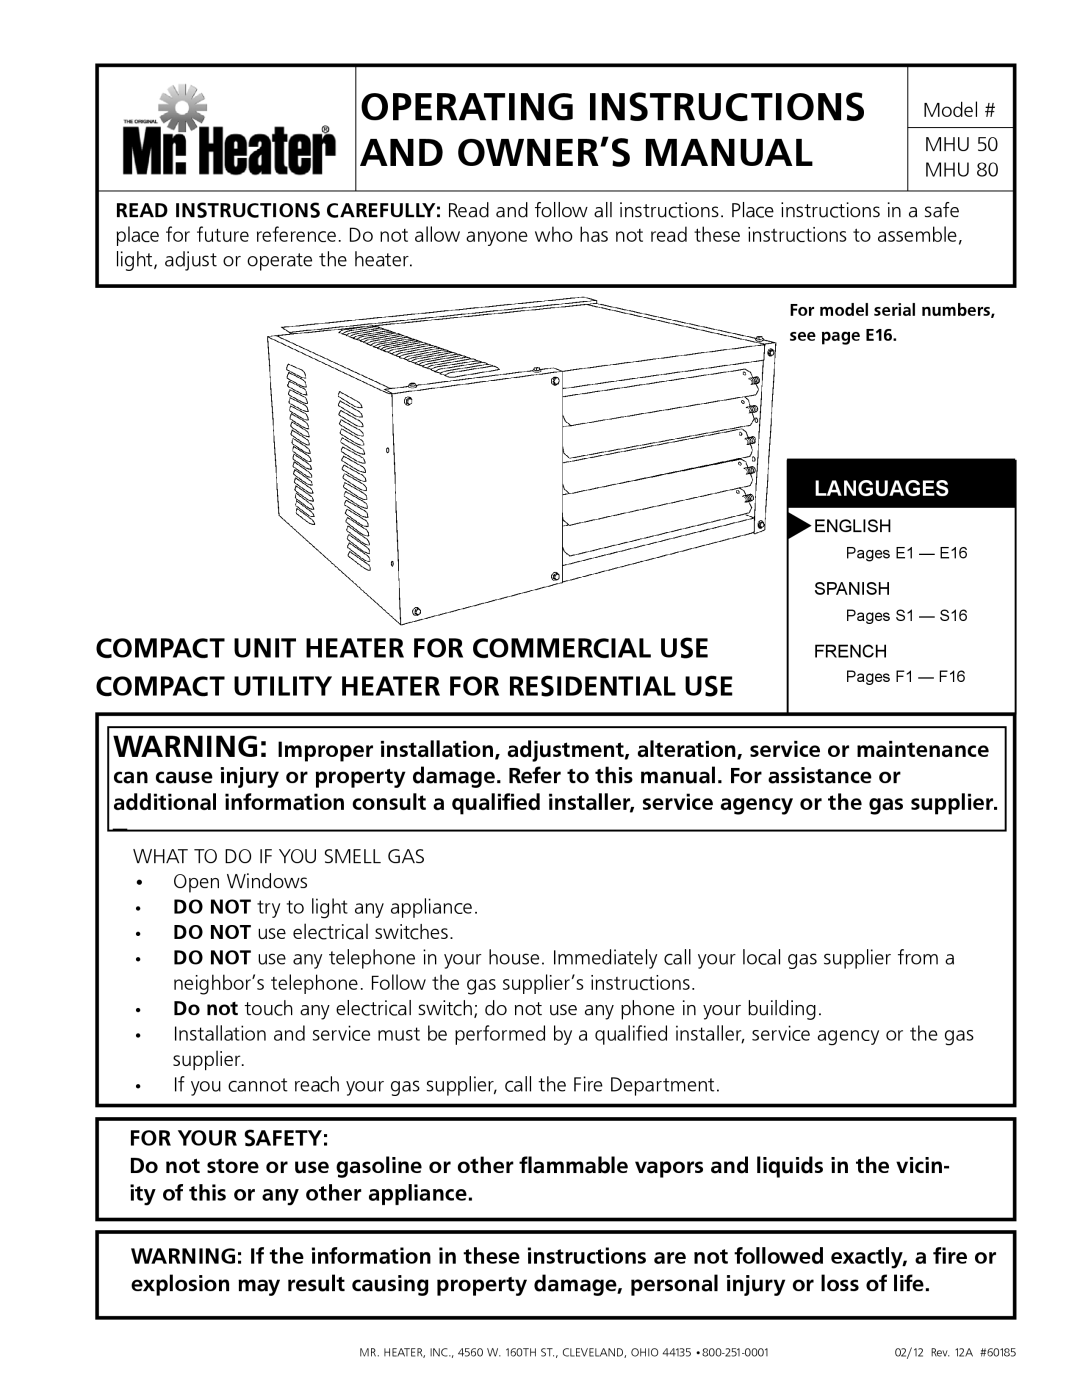 Mr. Heater MHU 80, MHU 50 owner manual 